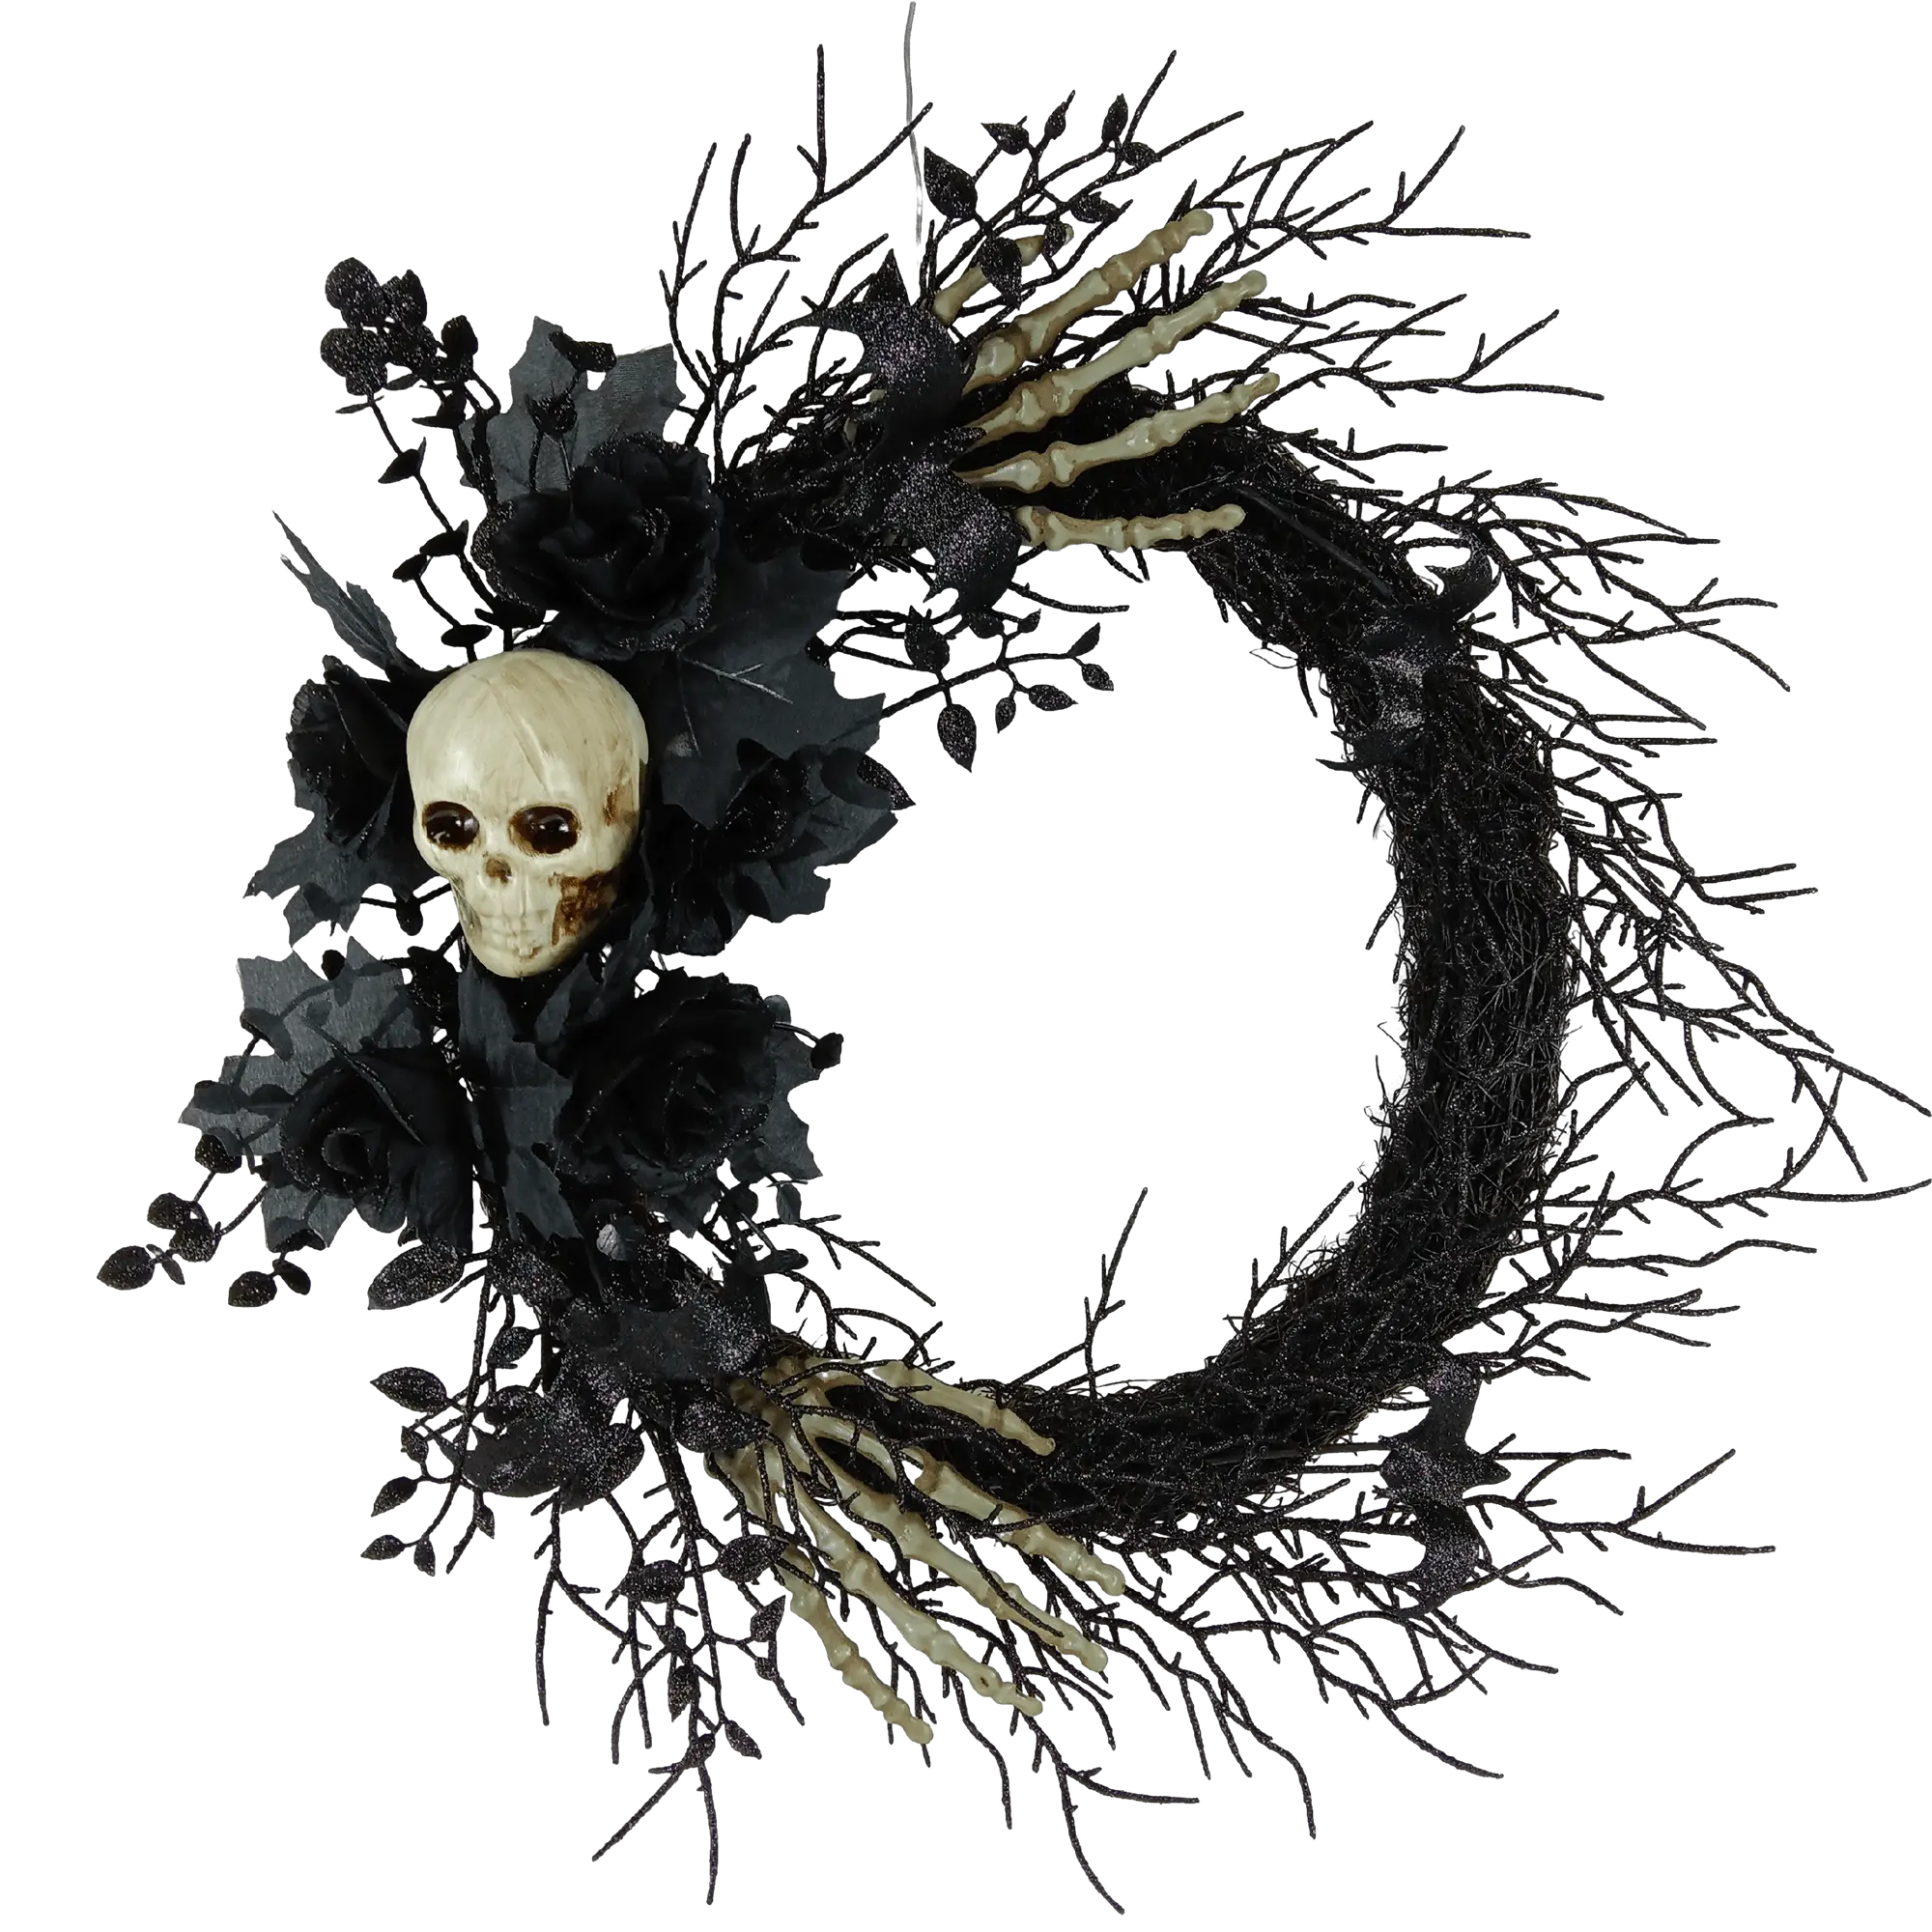 Senmasine 24 pollici decorazione Diy teste di scheletro Glitter a mano rami morti neri rose artificiali foglie di fiori corona di Halloween